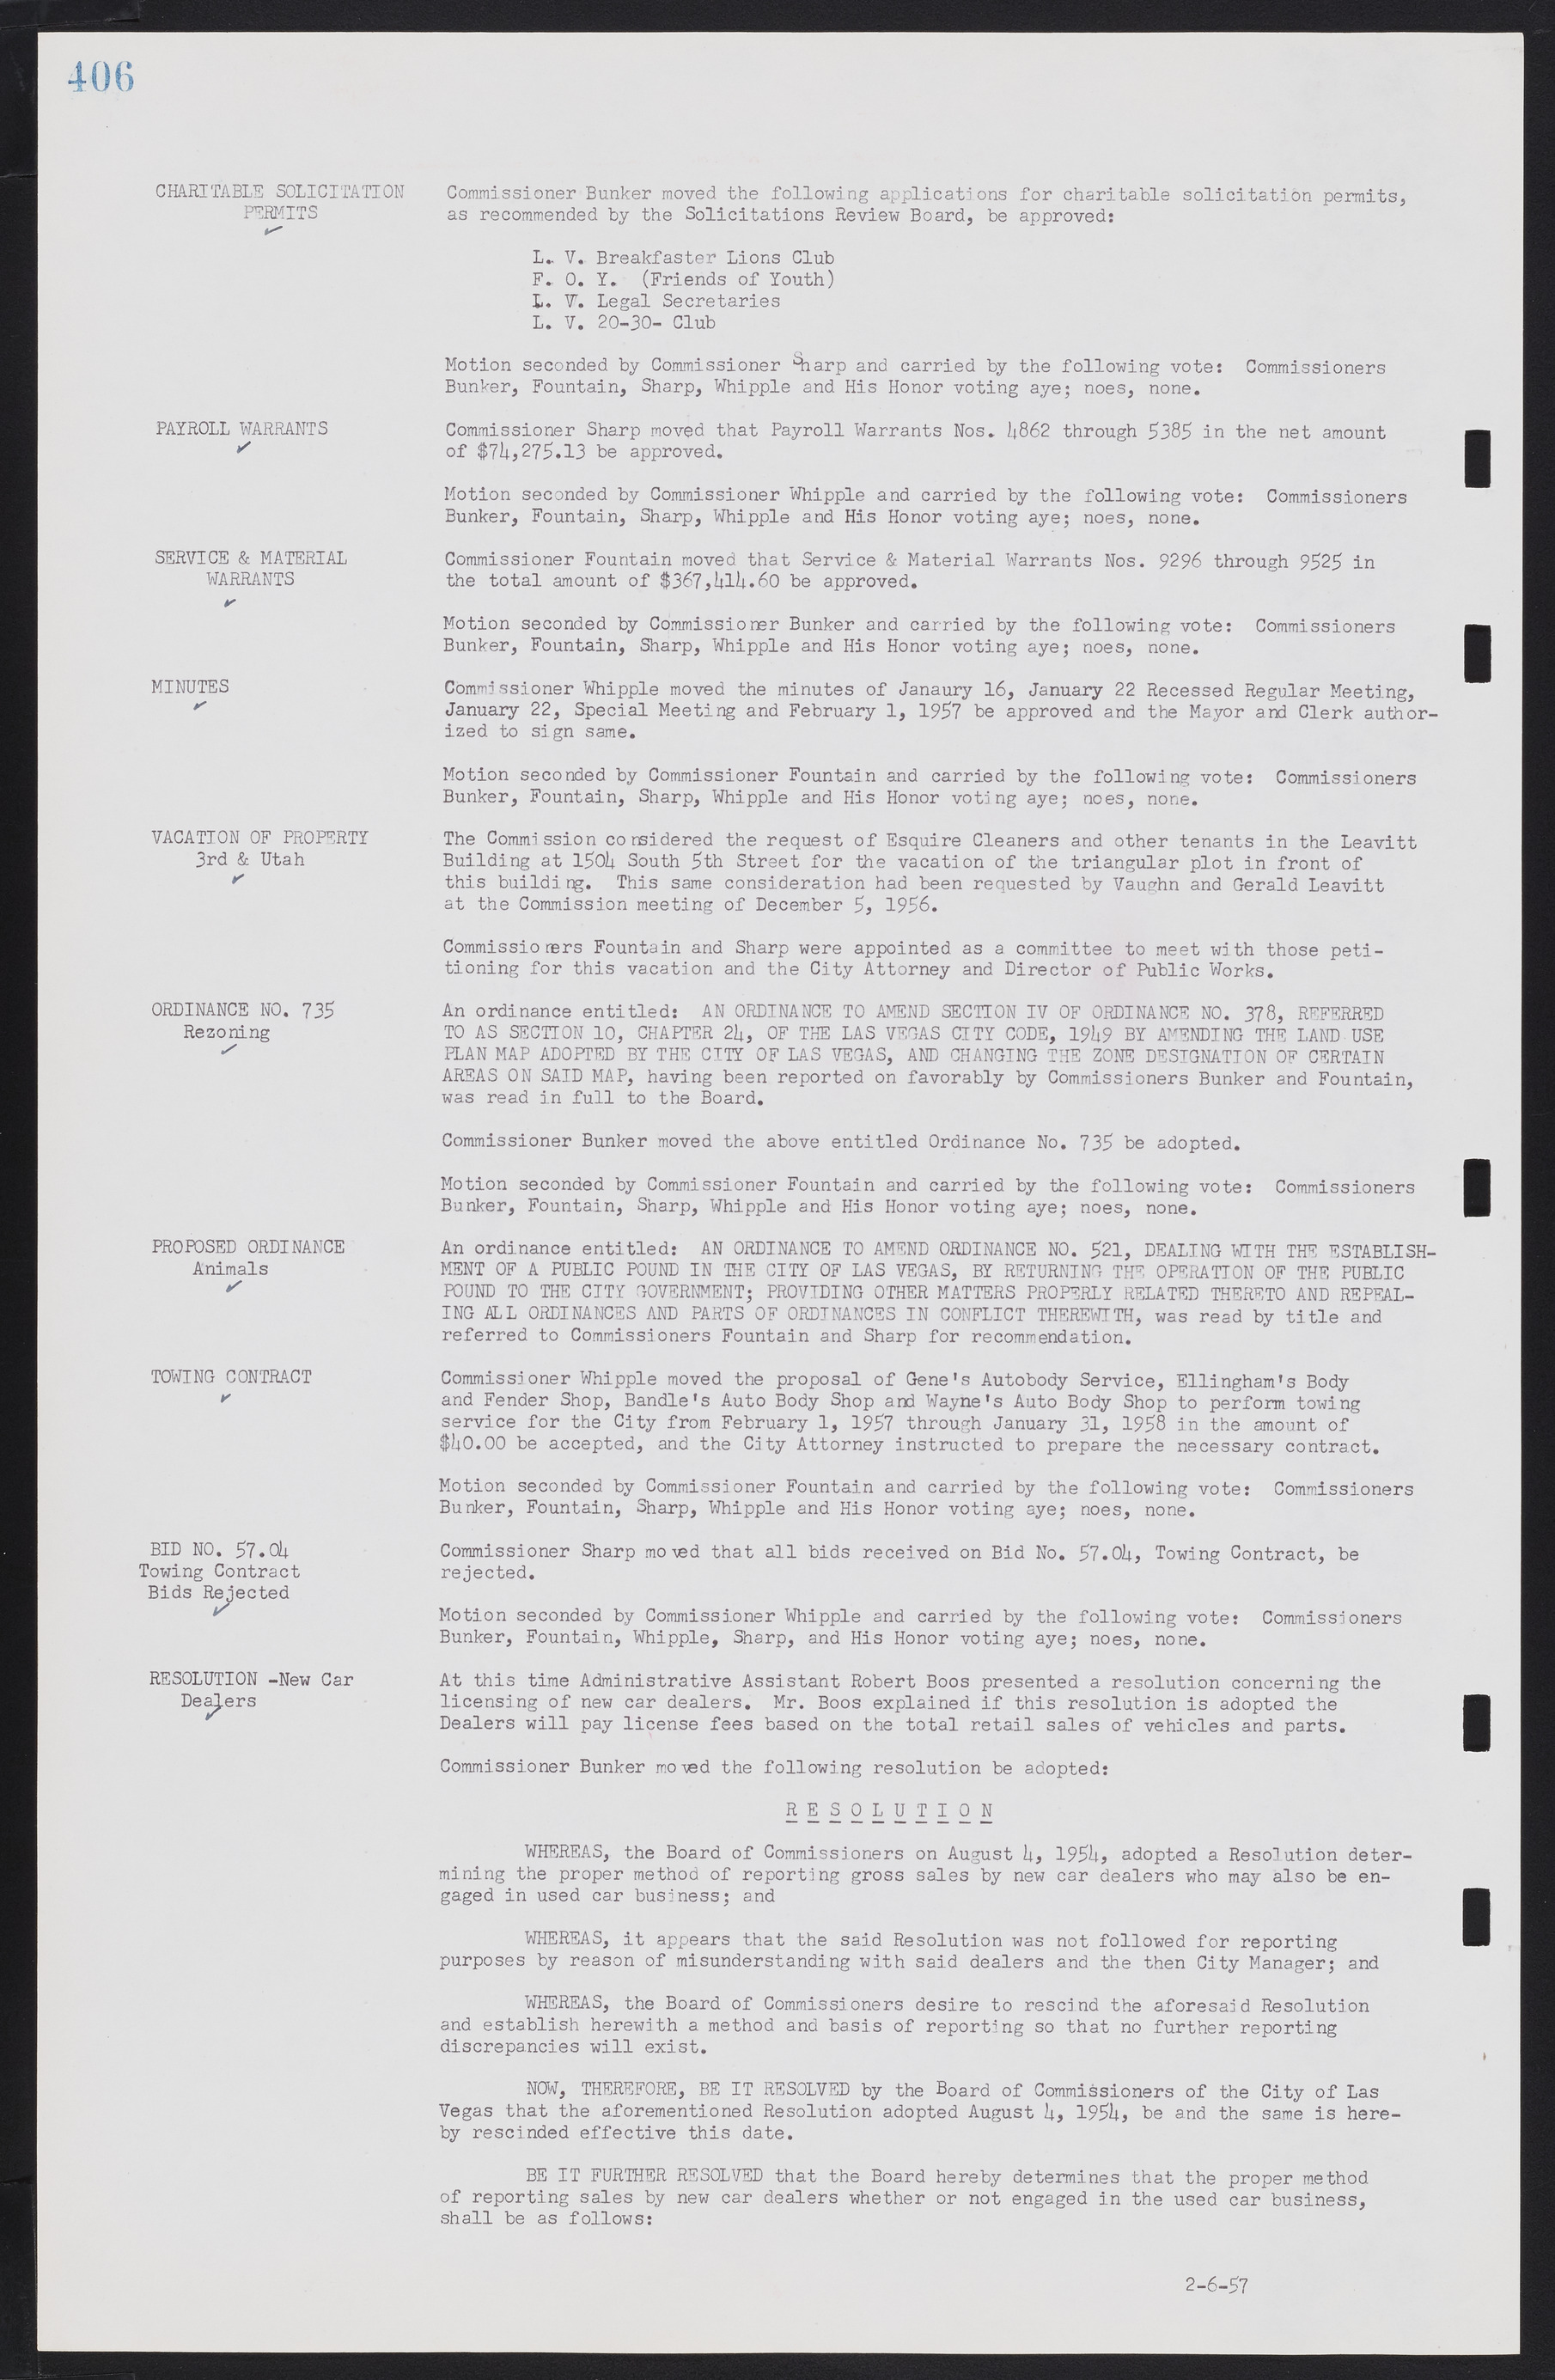 Las Vegas City Commission Minutes, September 21, 1955 to November 20, 1957, lvc000010-426